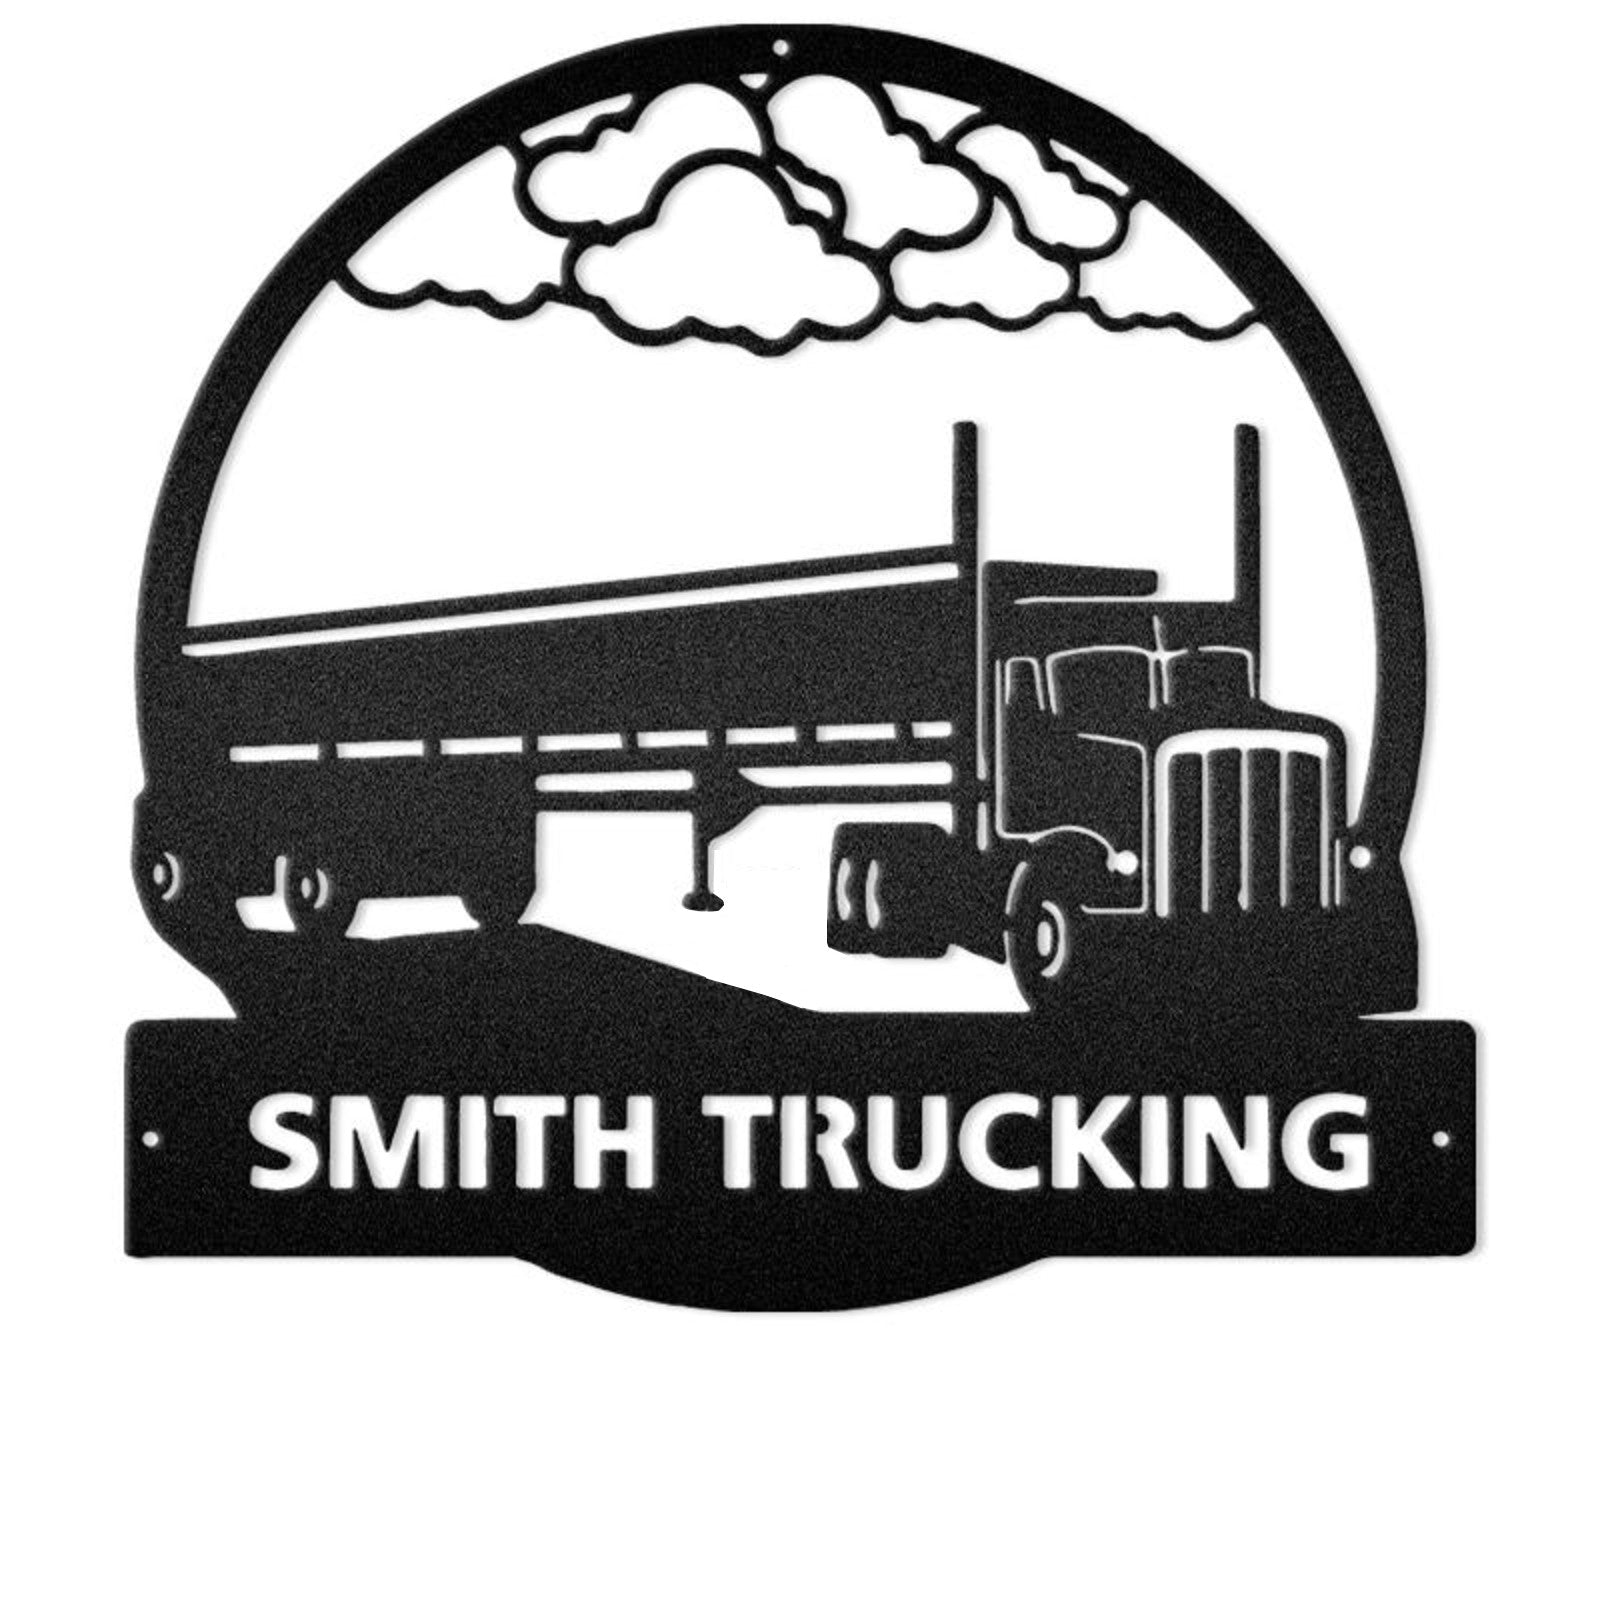 Custom Big Rig Semi-trailer Truck Vehicle Metal Sign - Metal Decor Wall Art - Heavy Equipment Operator Gifts